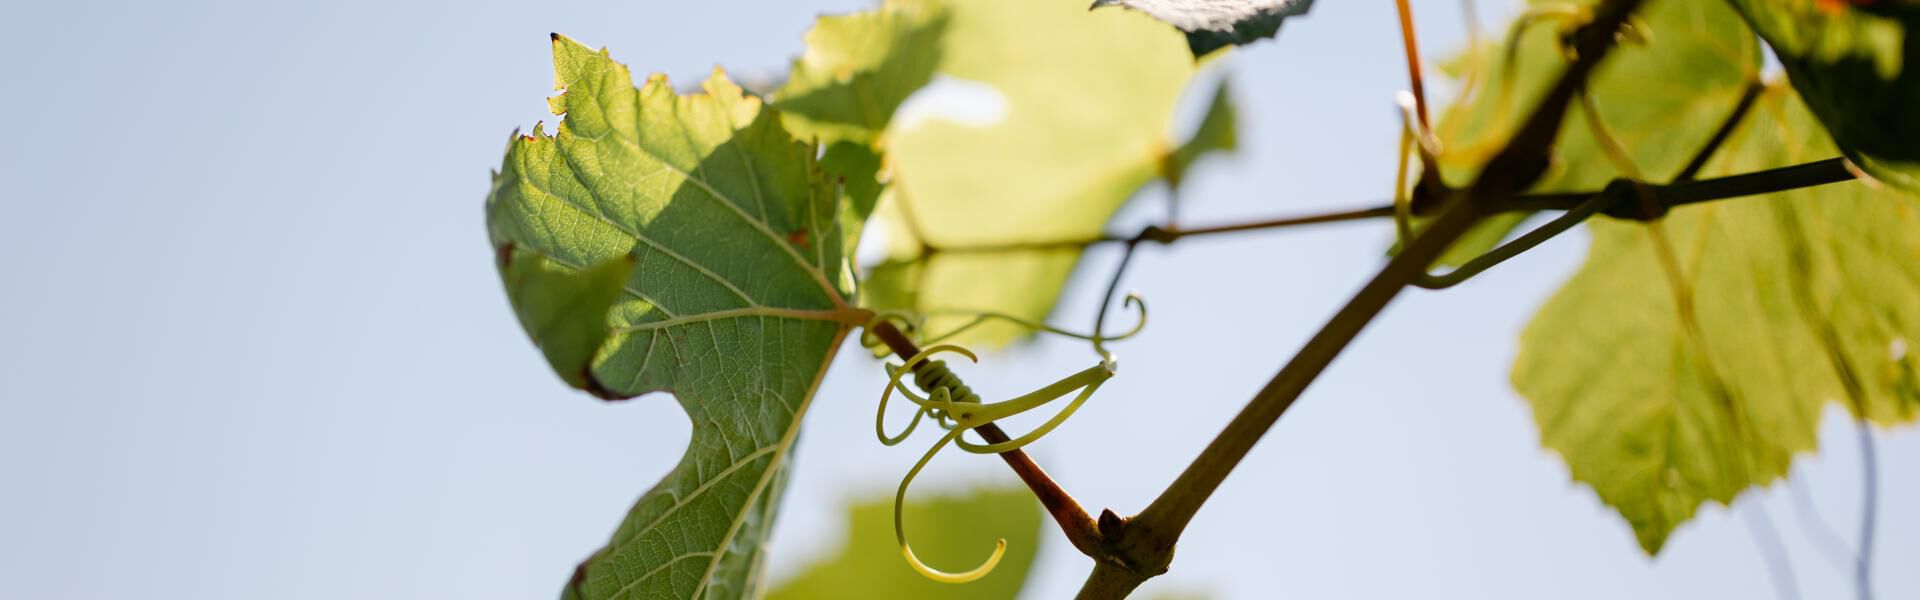 Close Up of Vineyard leaves